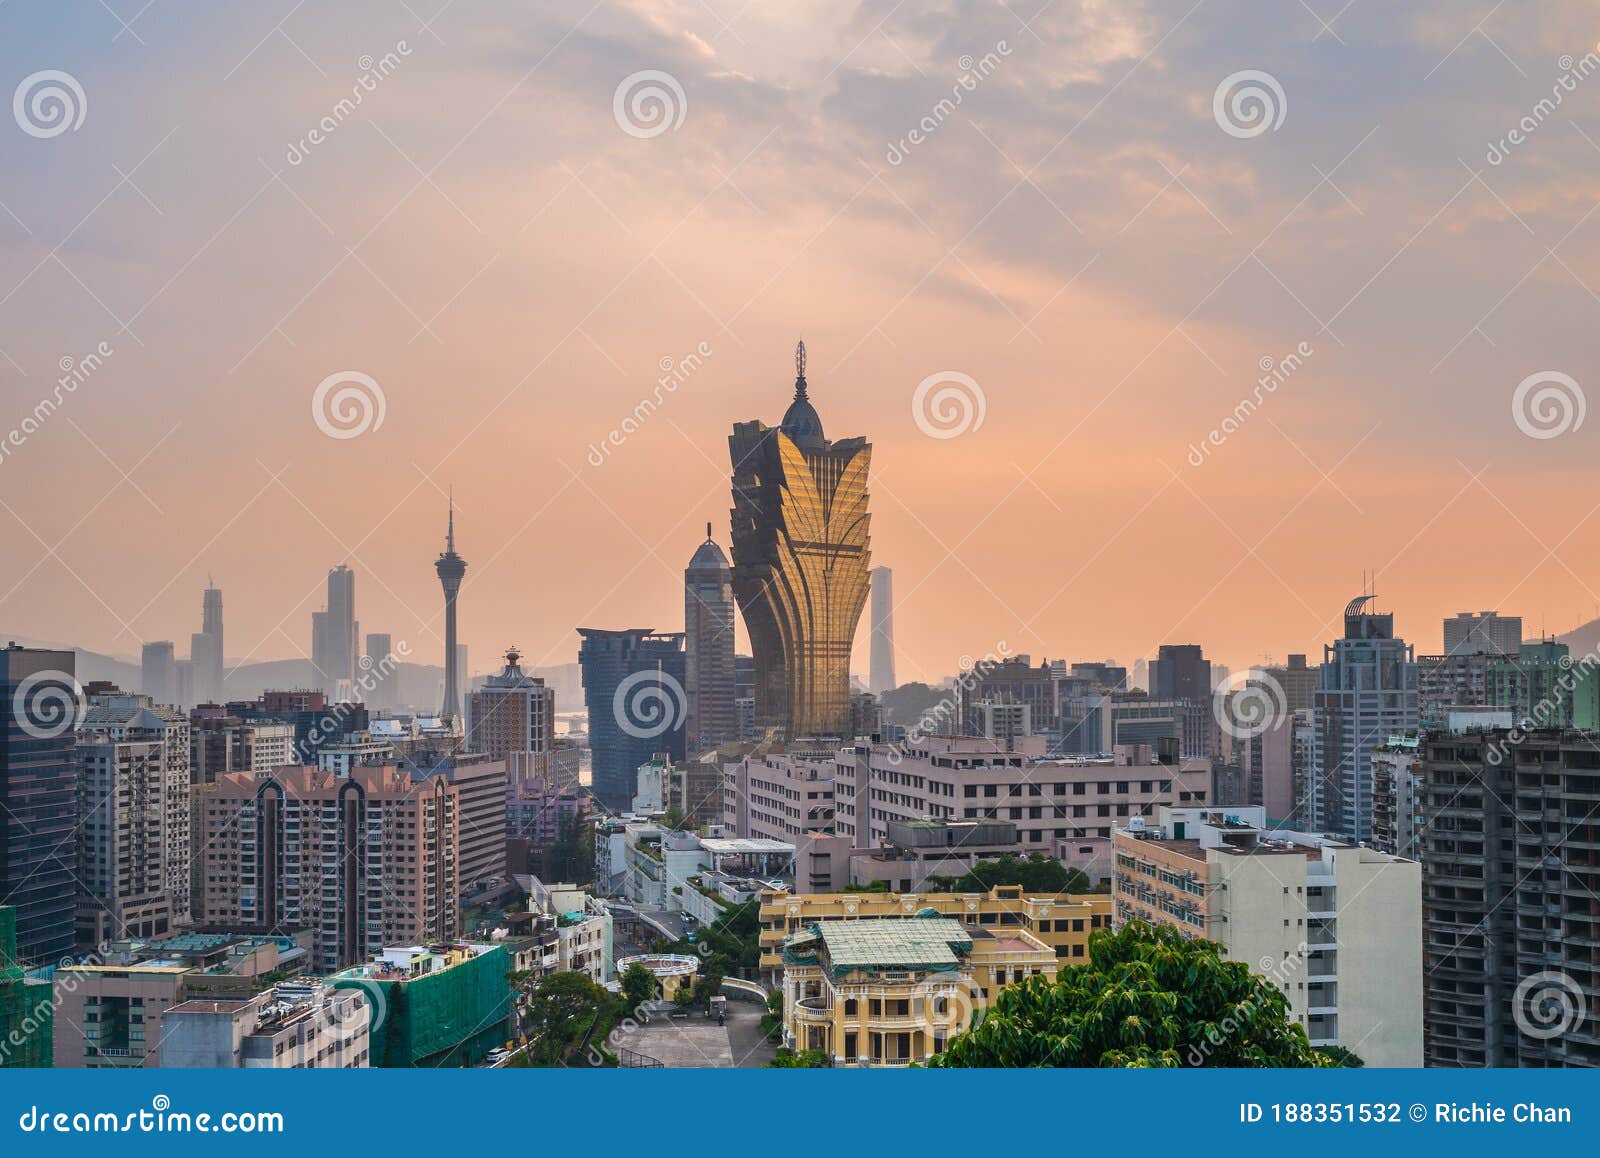 cityscape of macao, china at dusk